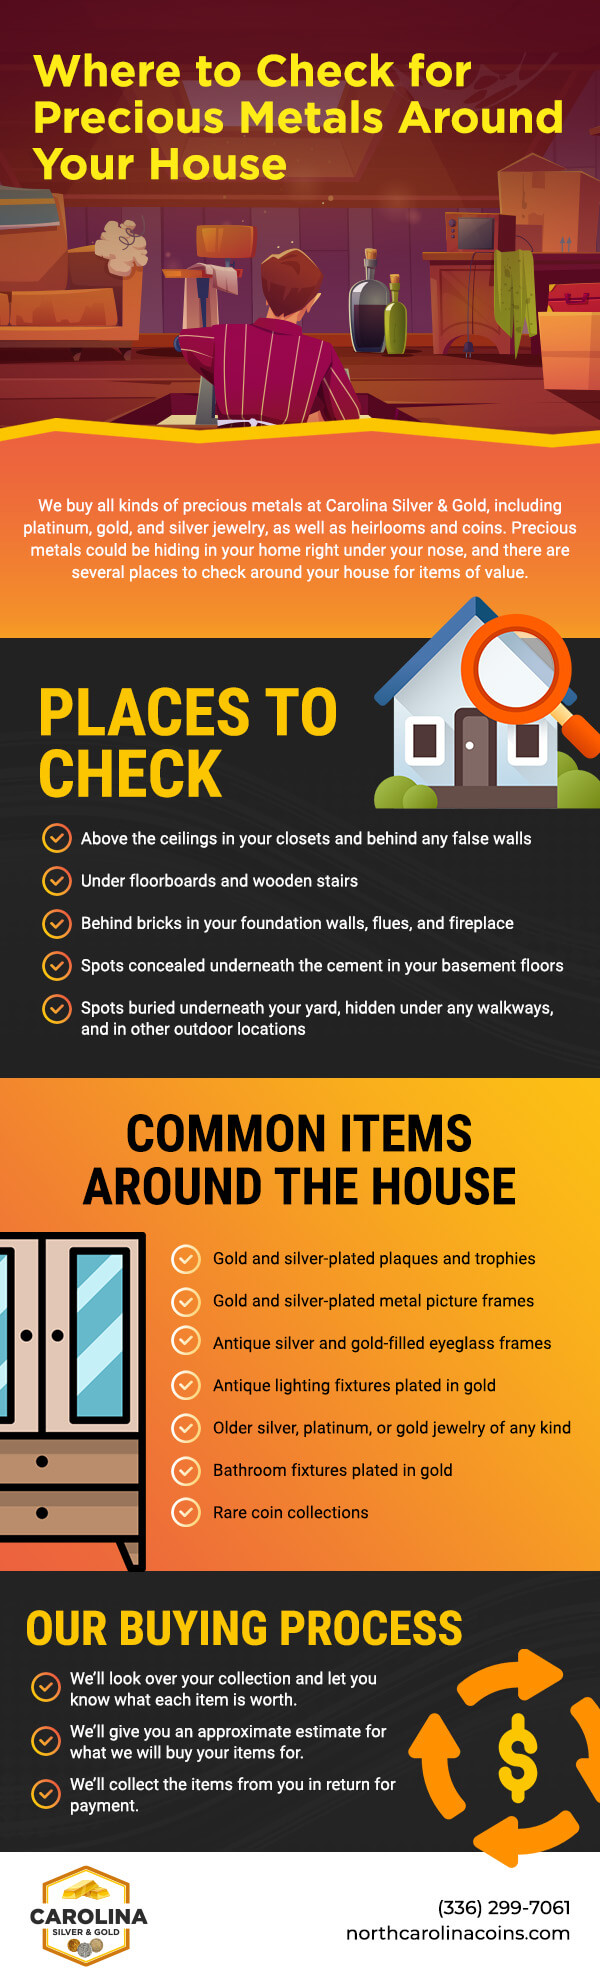 Where to Check for Precious Metals Around Your House